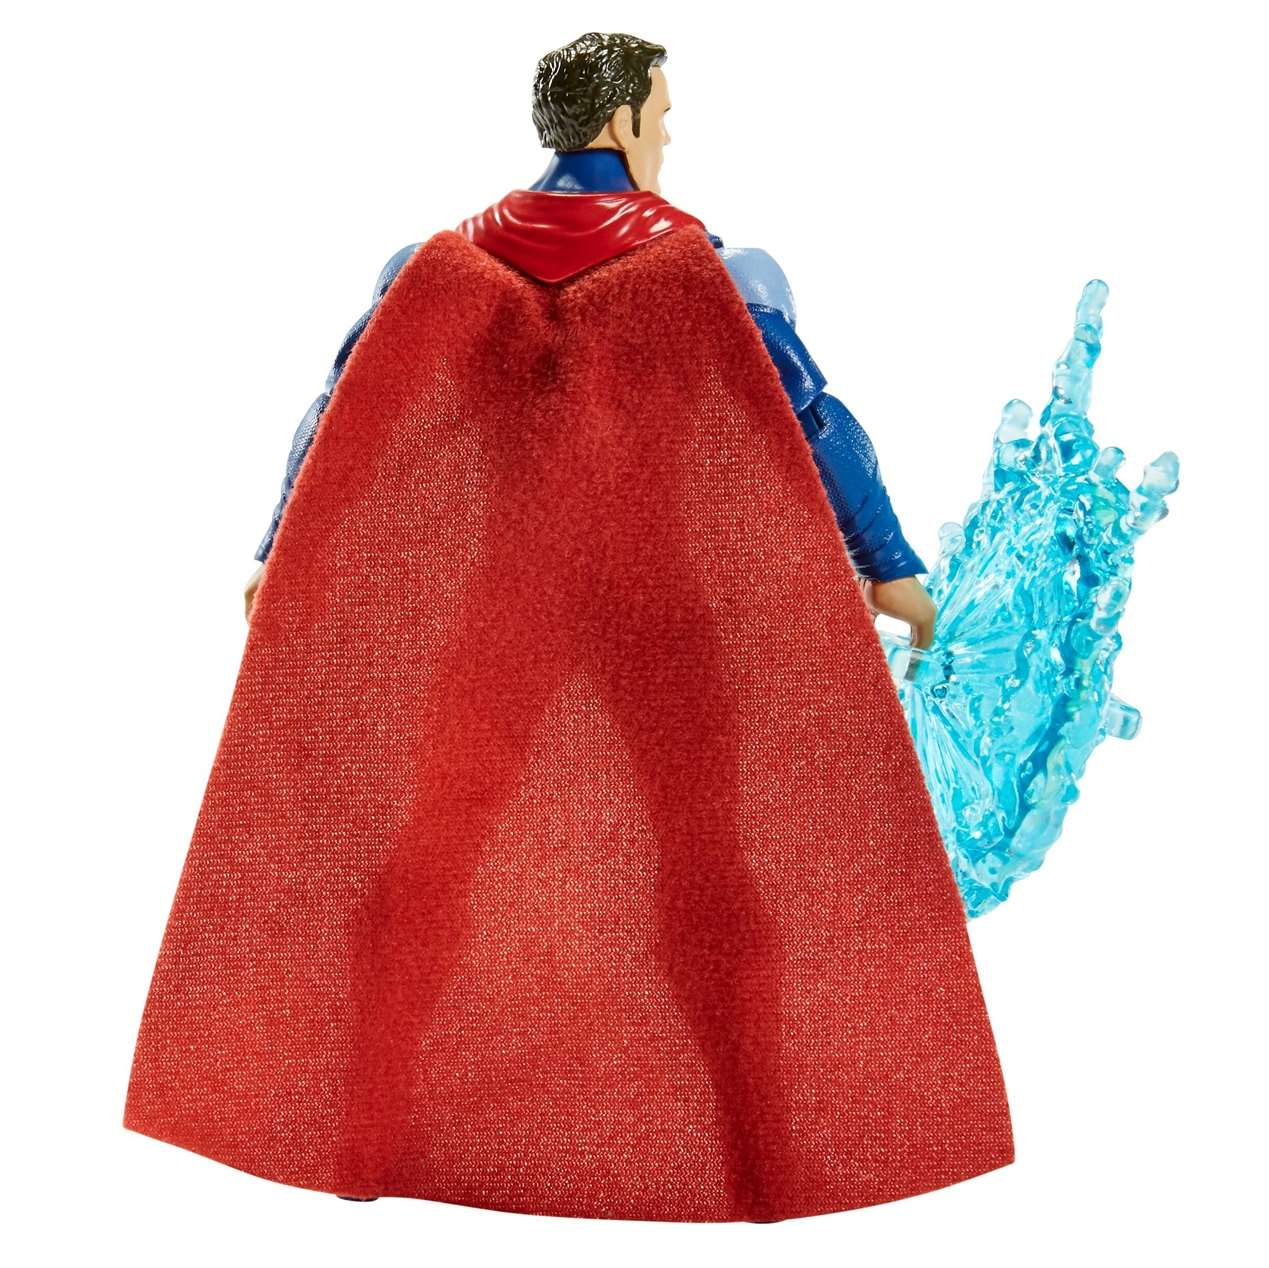 Superman Power Slingers Figura Dc Cómics Justice League